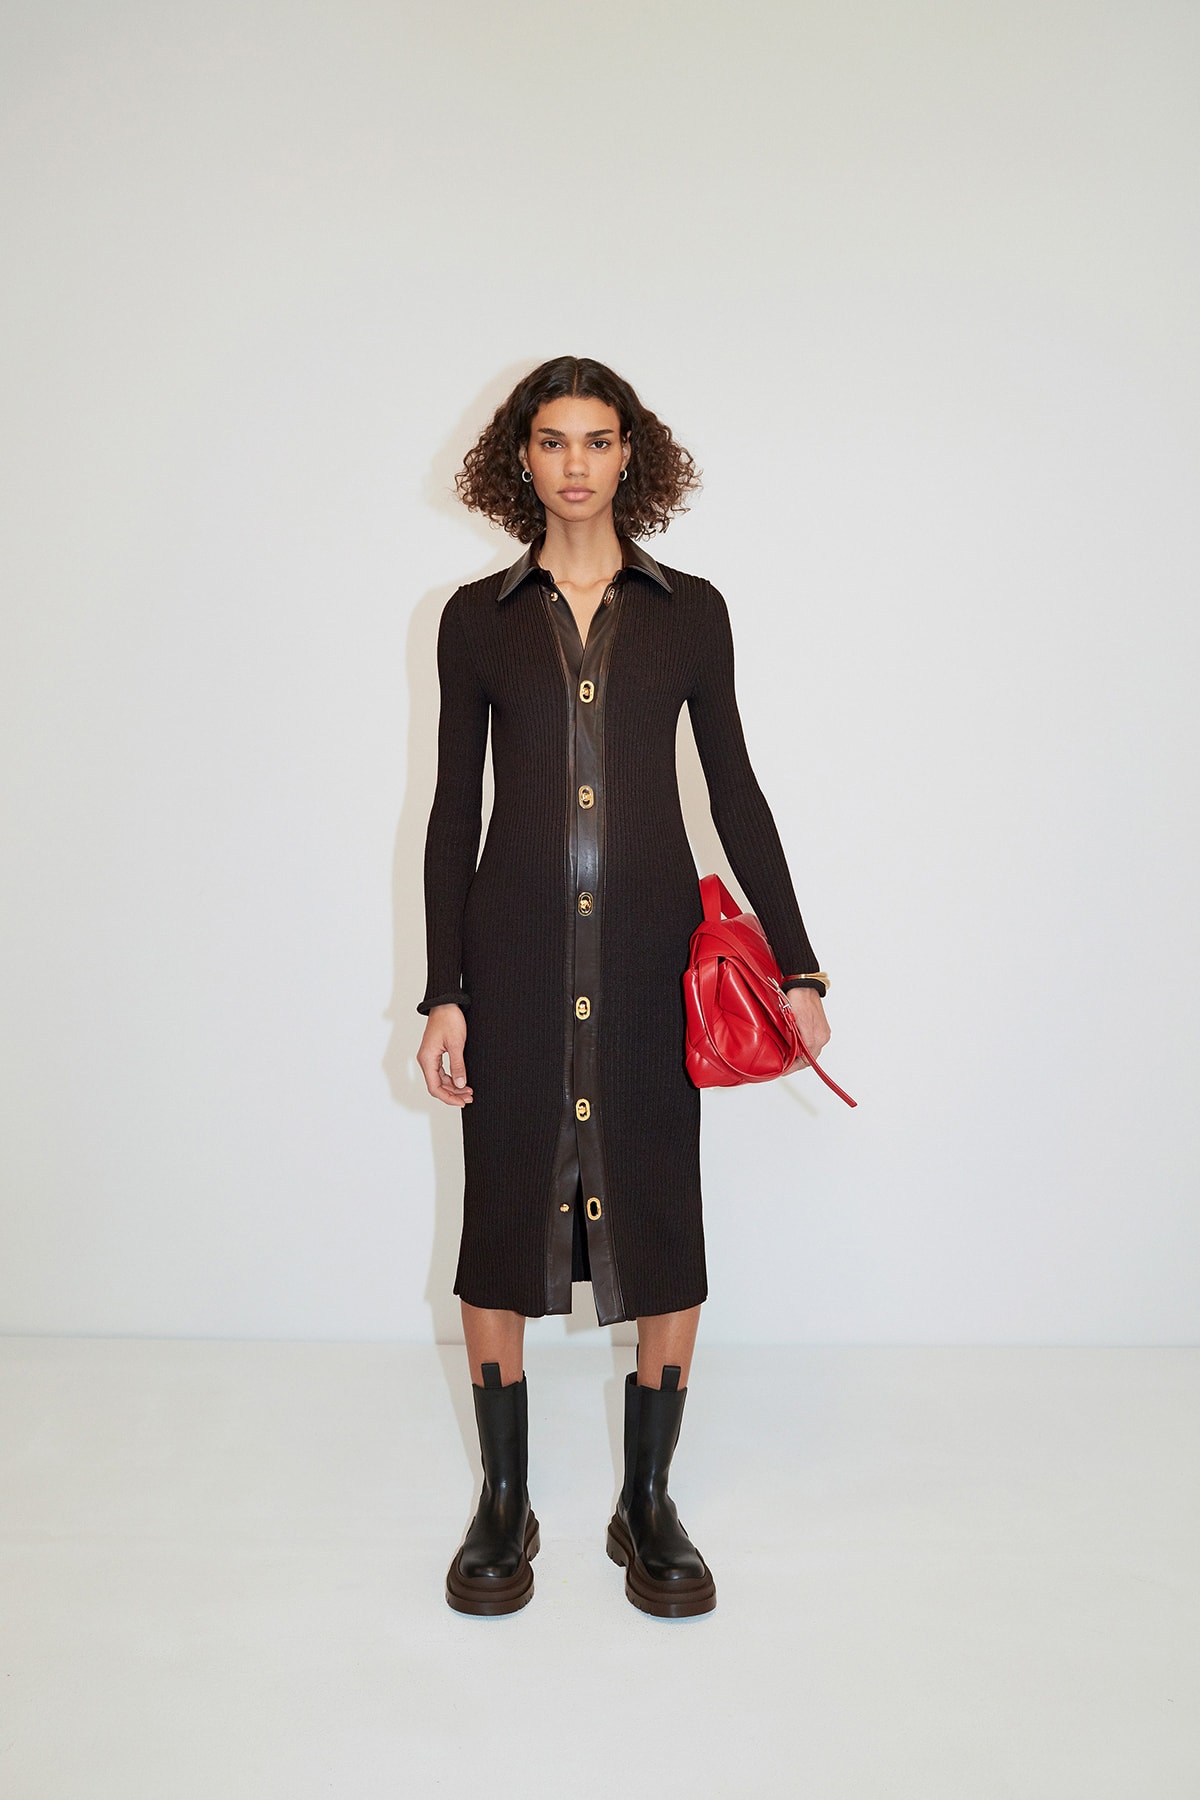 Bottega Veneta Pre-Fall 2020 Collection Lookbook Button Dress Black